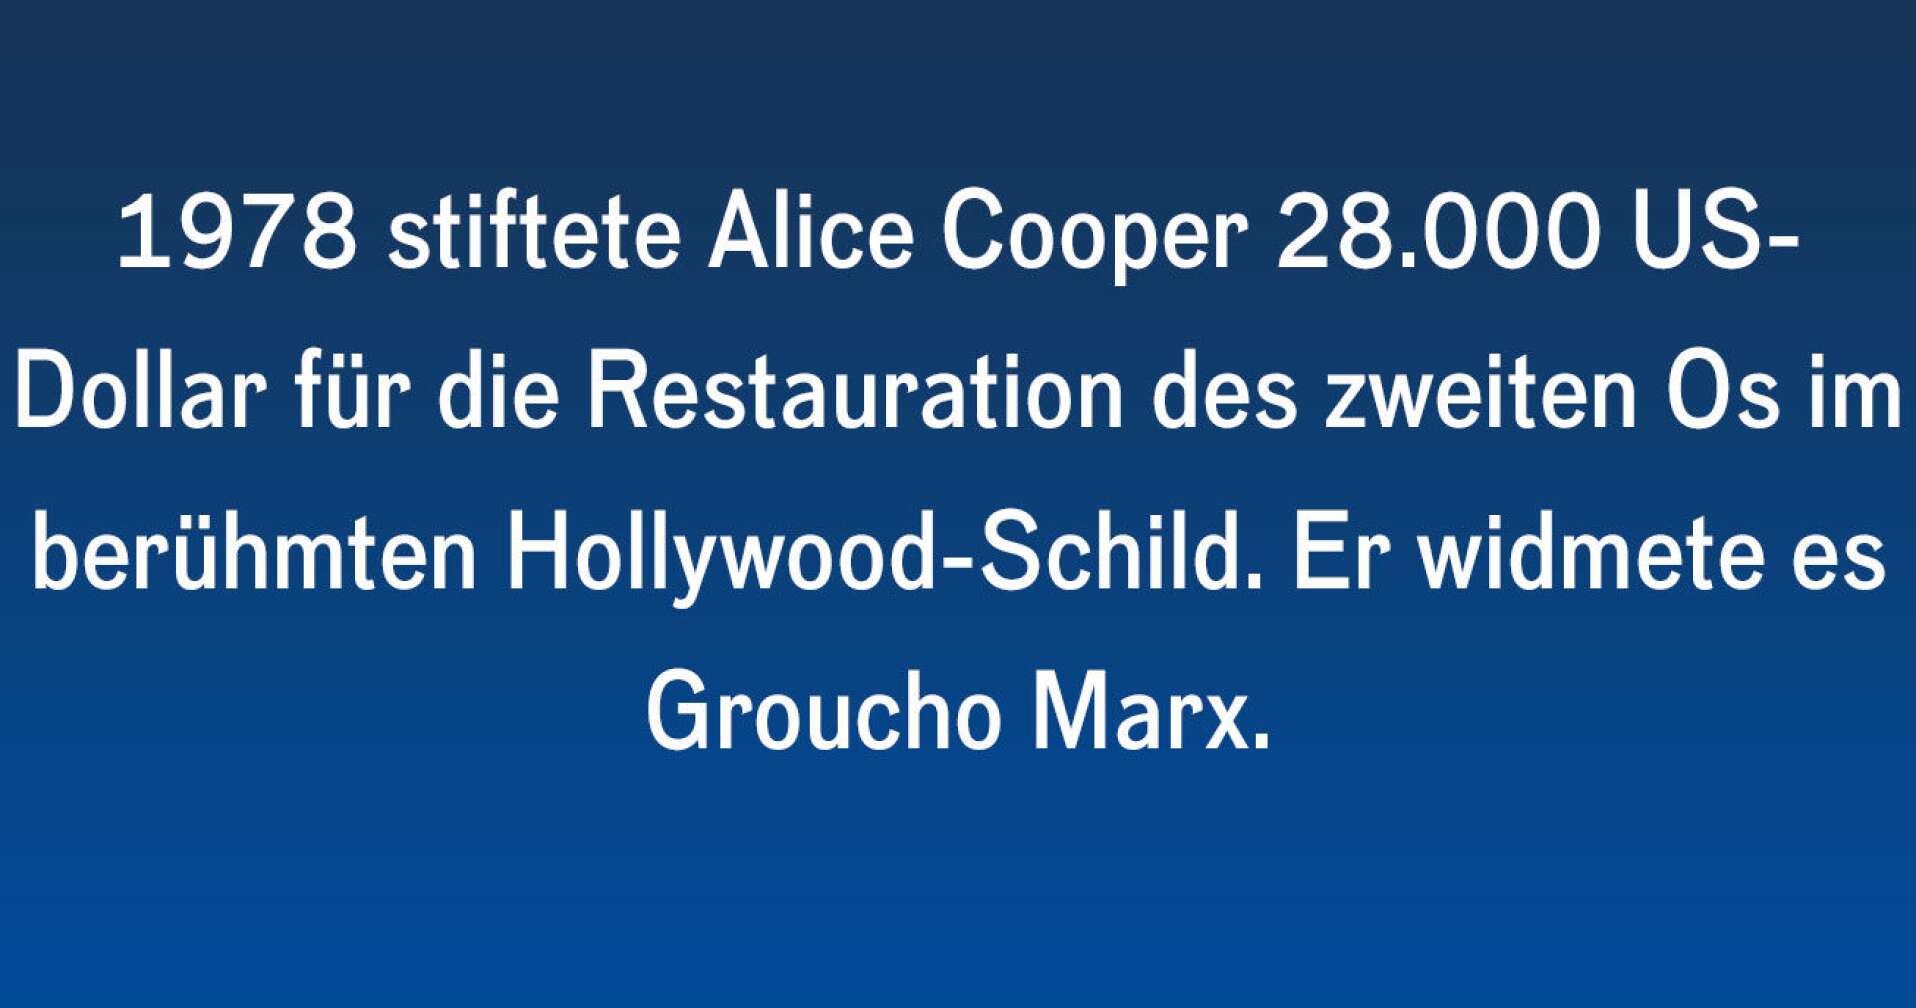 10 Fakten über Alice Cooper #7